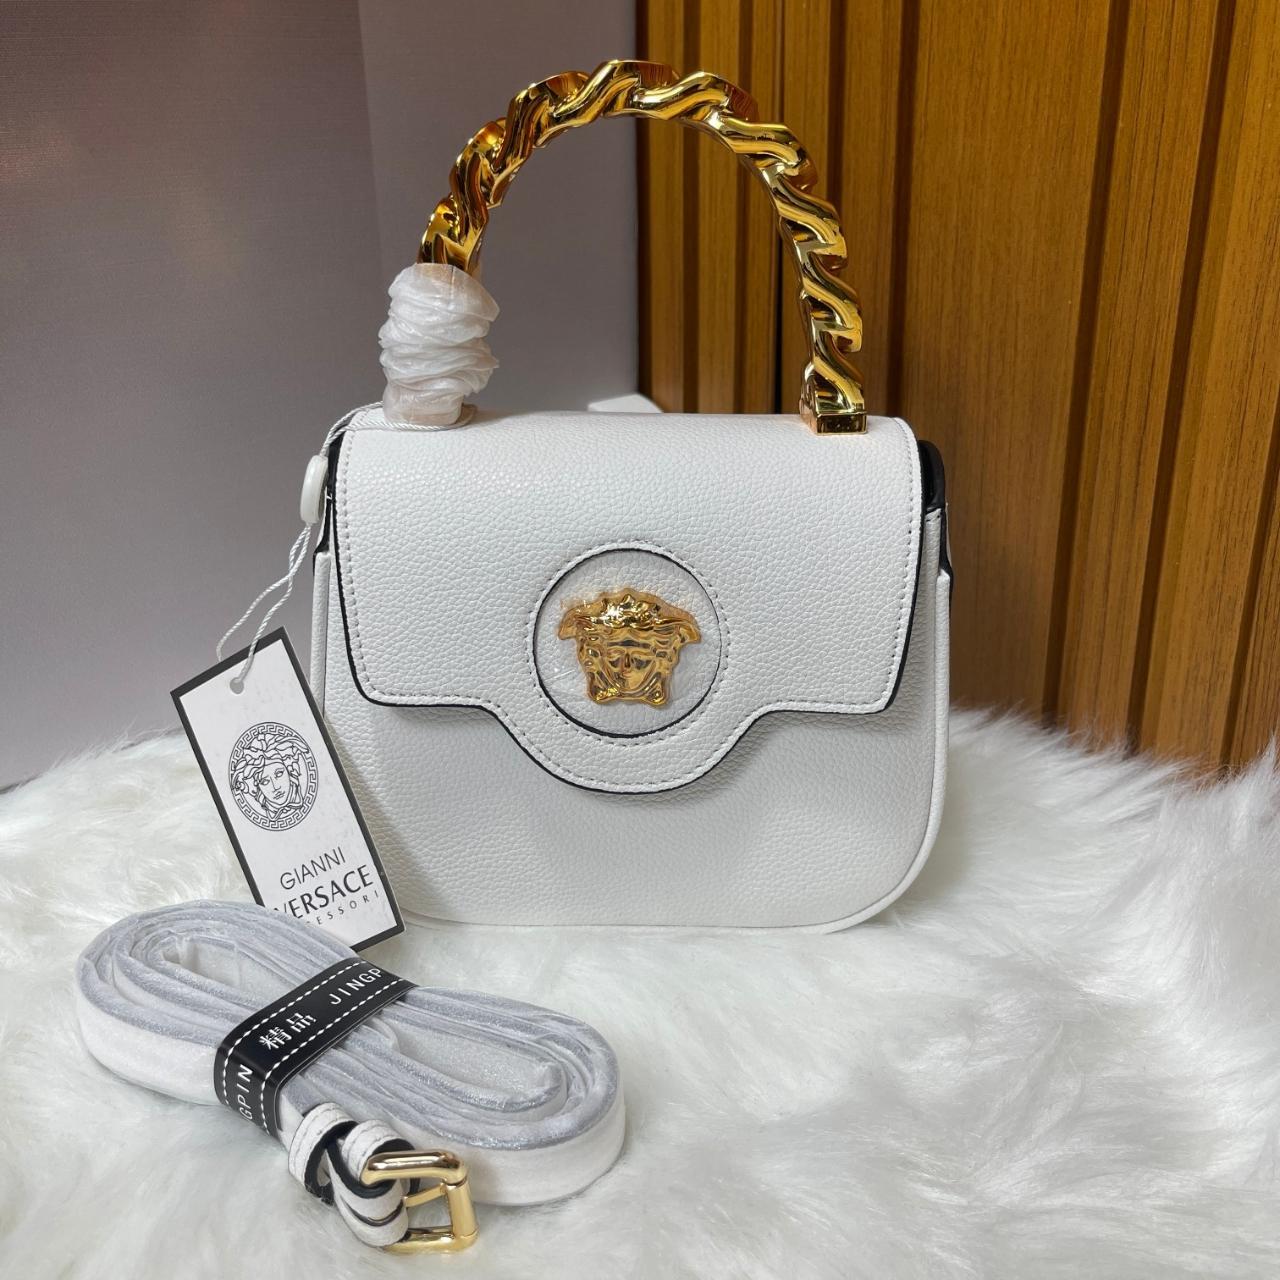 GIANNI VERSACE - GIANNI VERSACE VINYL BAROQUE PRINT BAG found on Polyvore |  Bags, Versace bag, Versace handbags